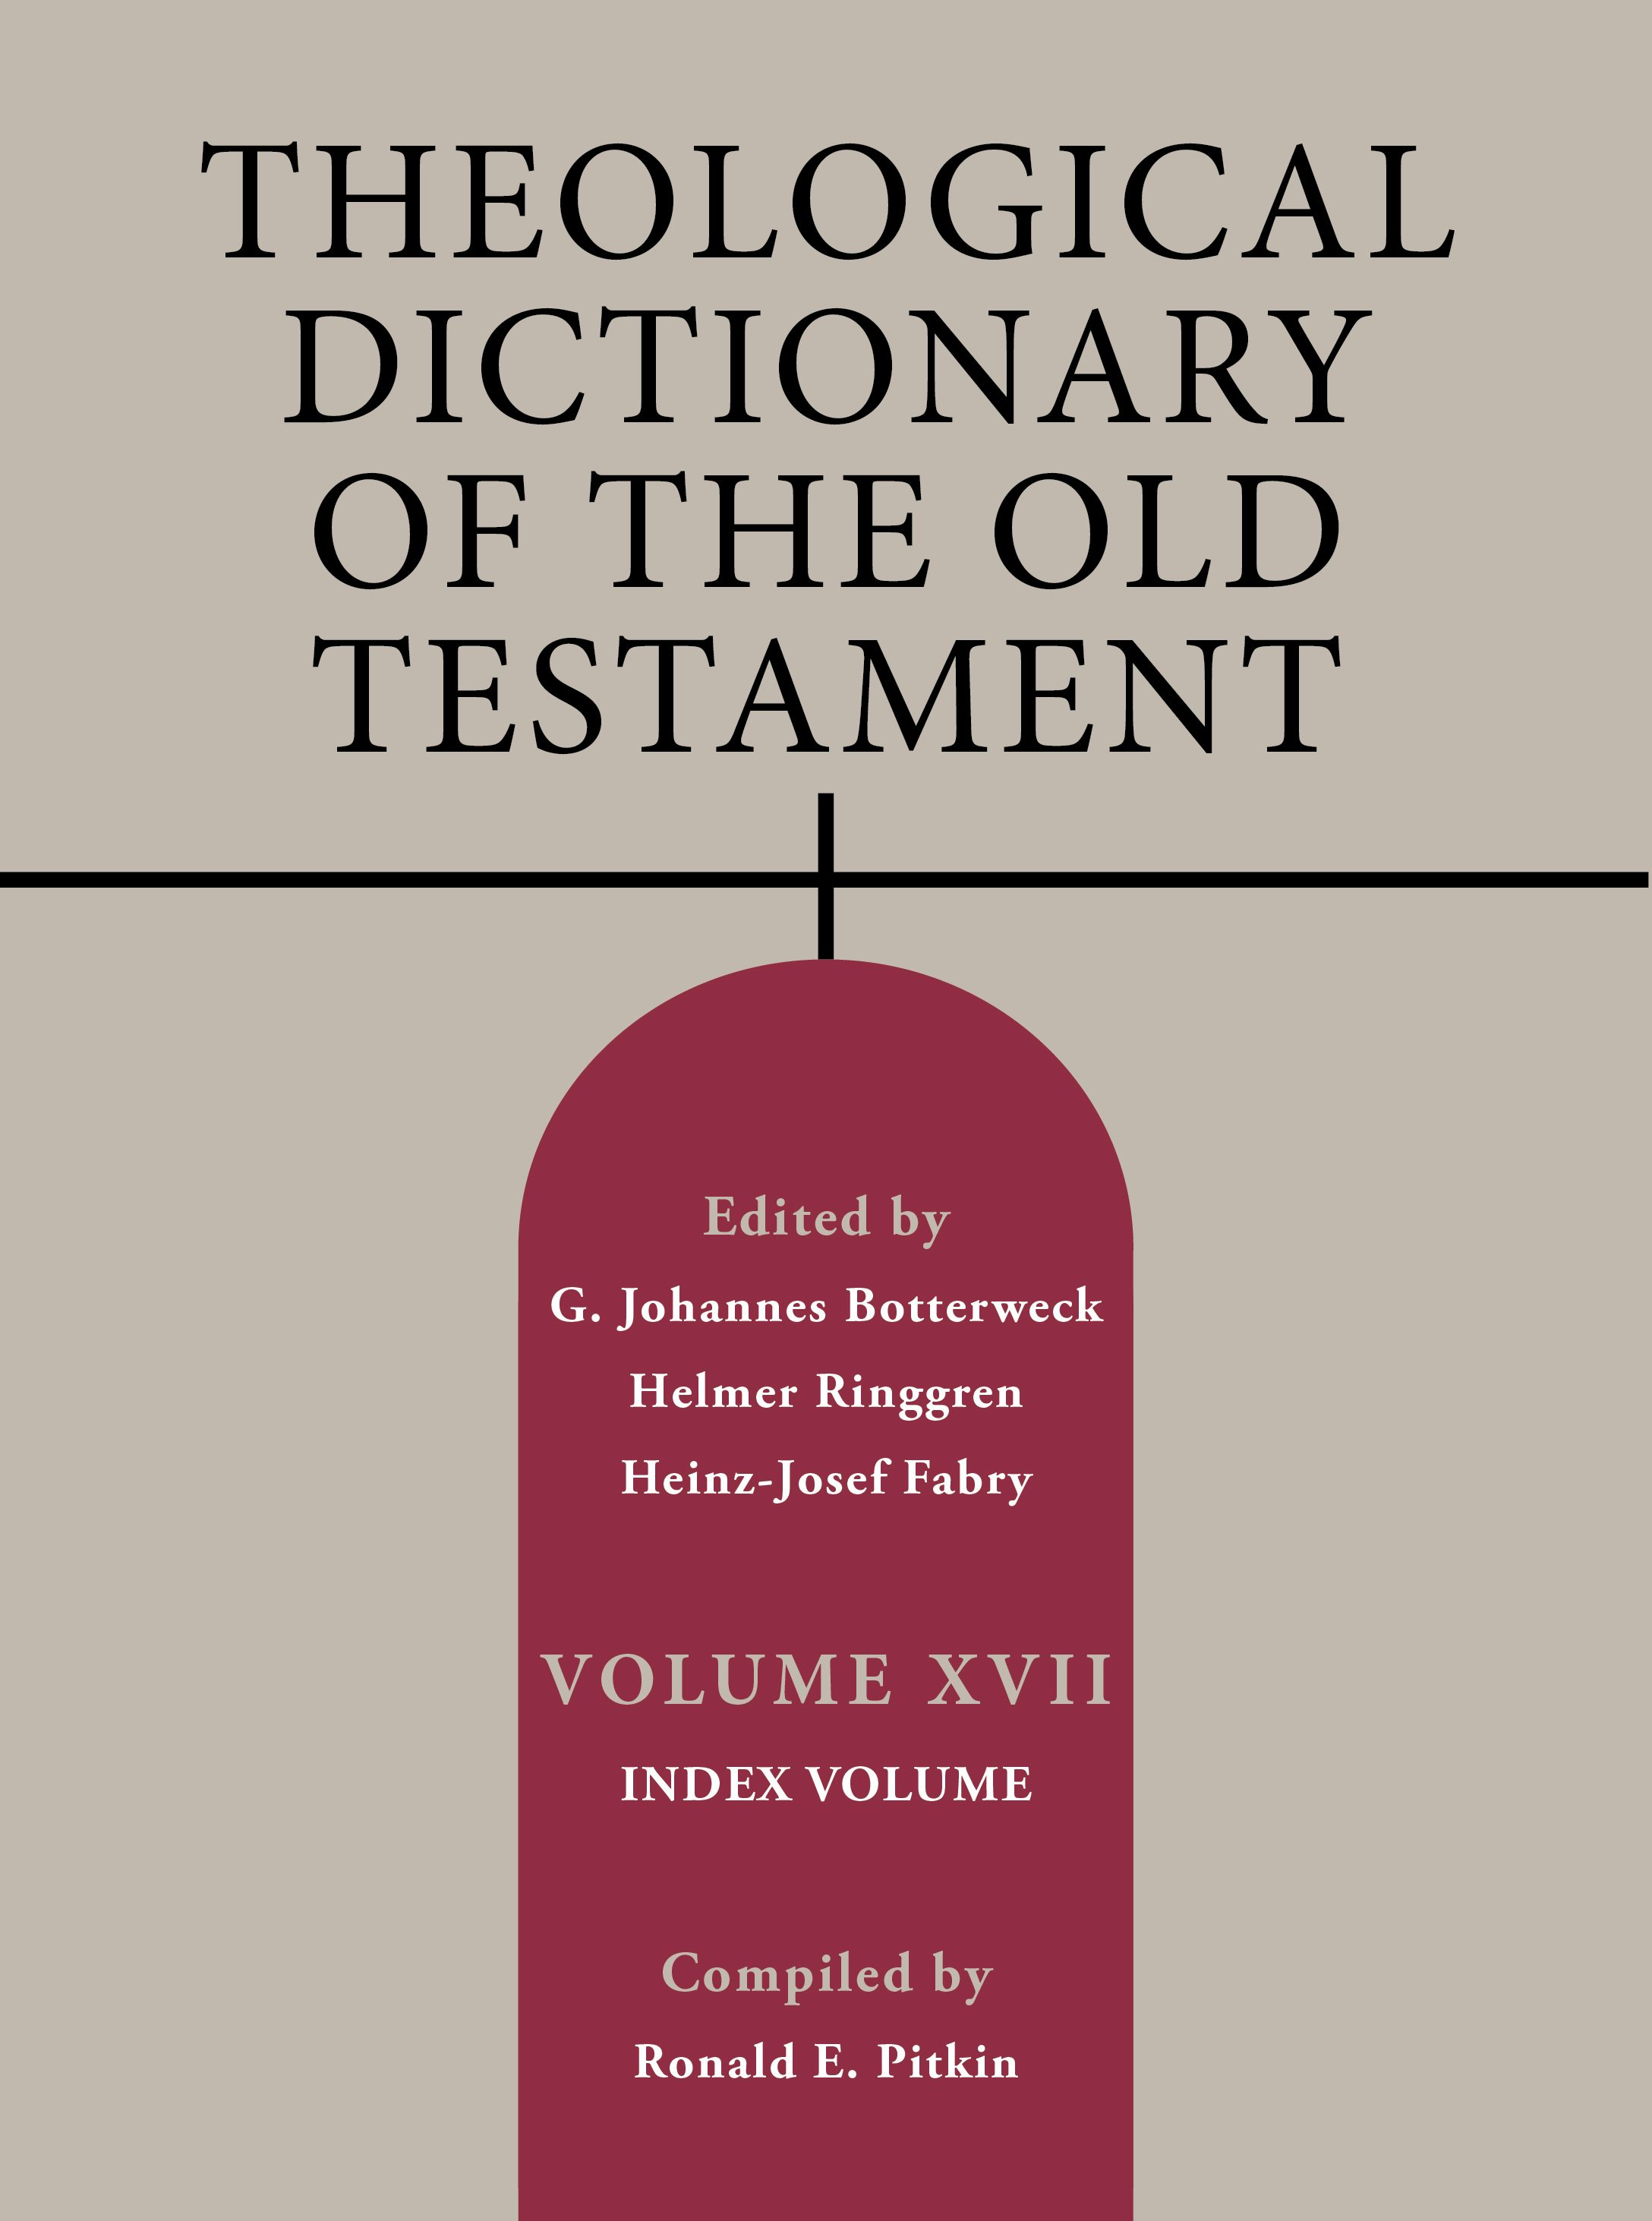 Theological Dictionary of the Old Testament: Volume VII/WILLIAM B EERDMAN CO/G. Johannes BotterweckハードカバーISBN-10